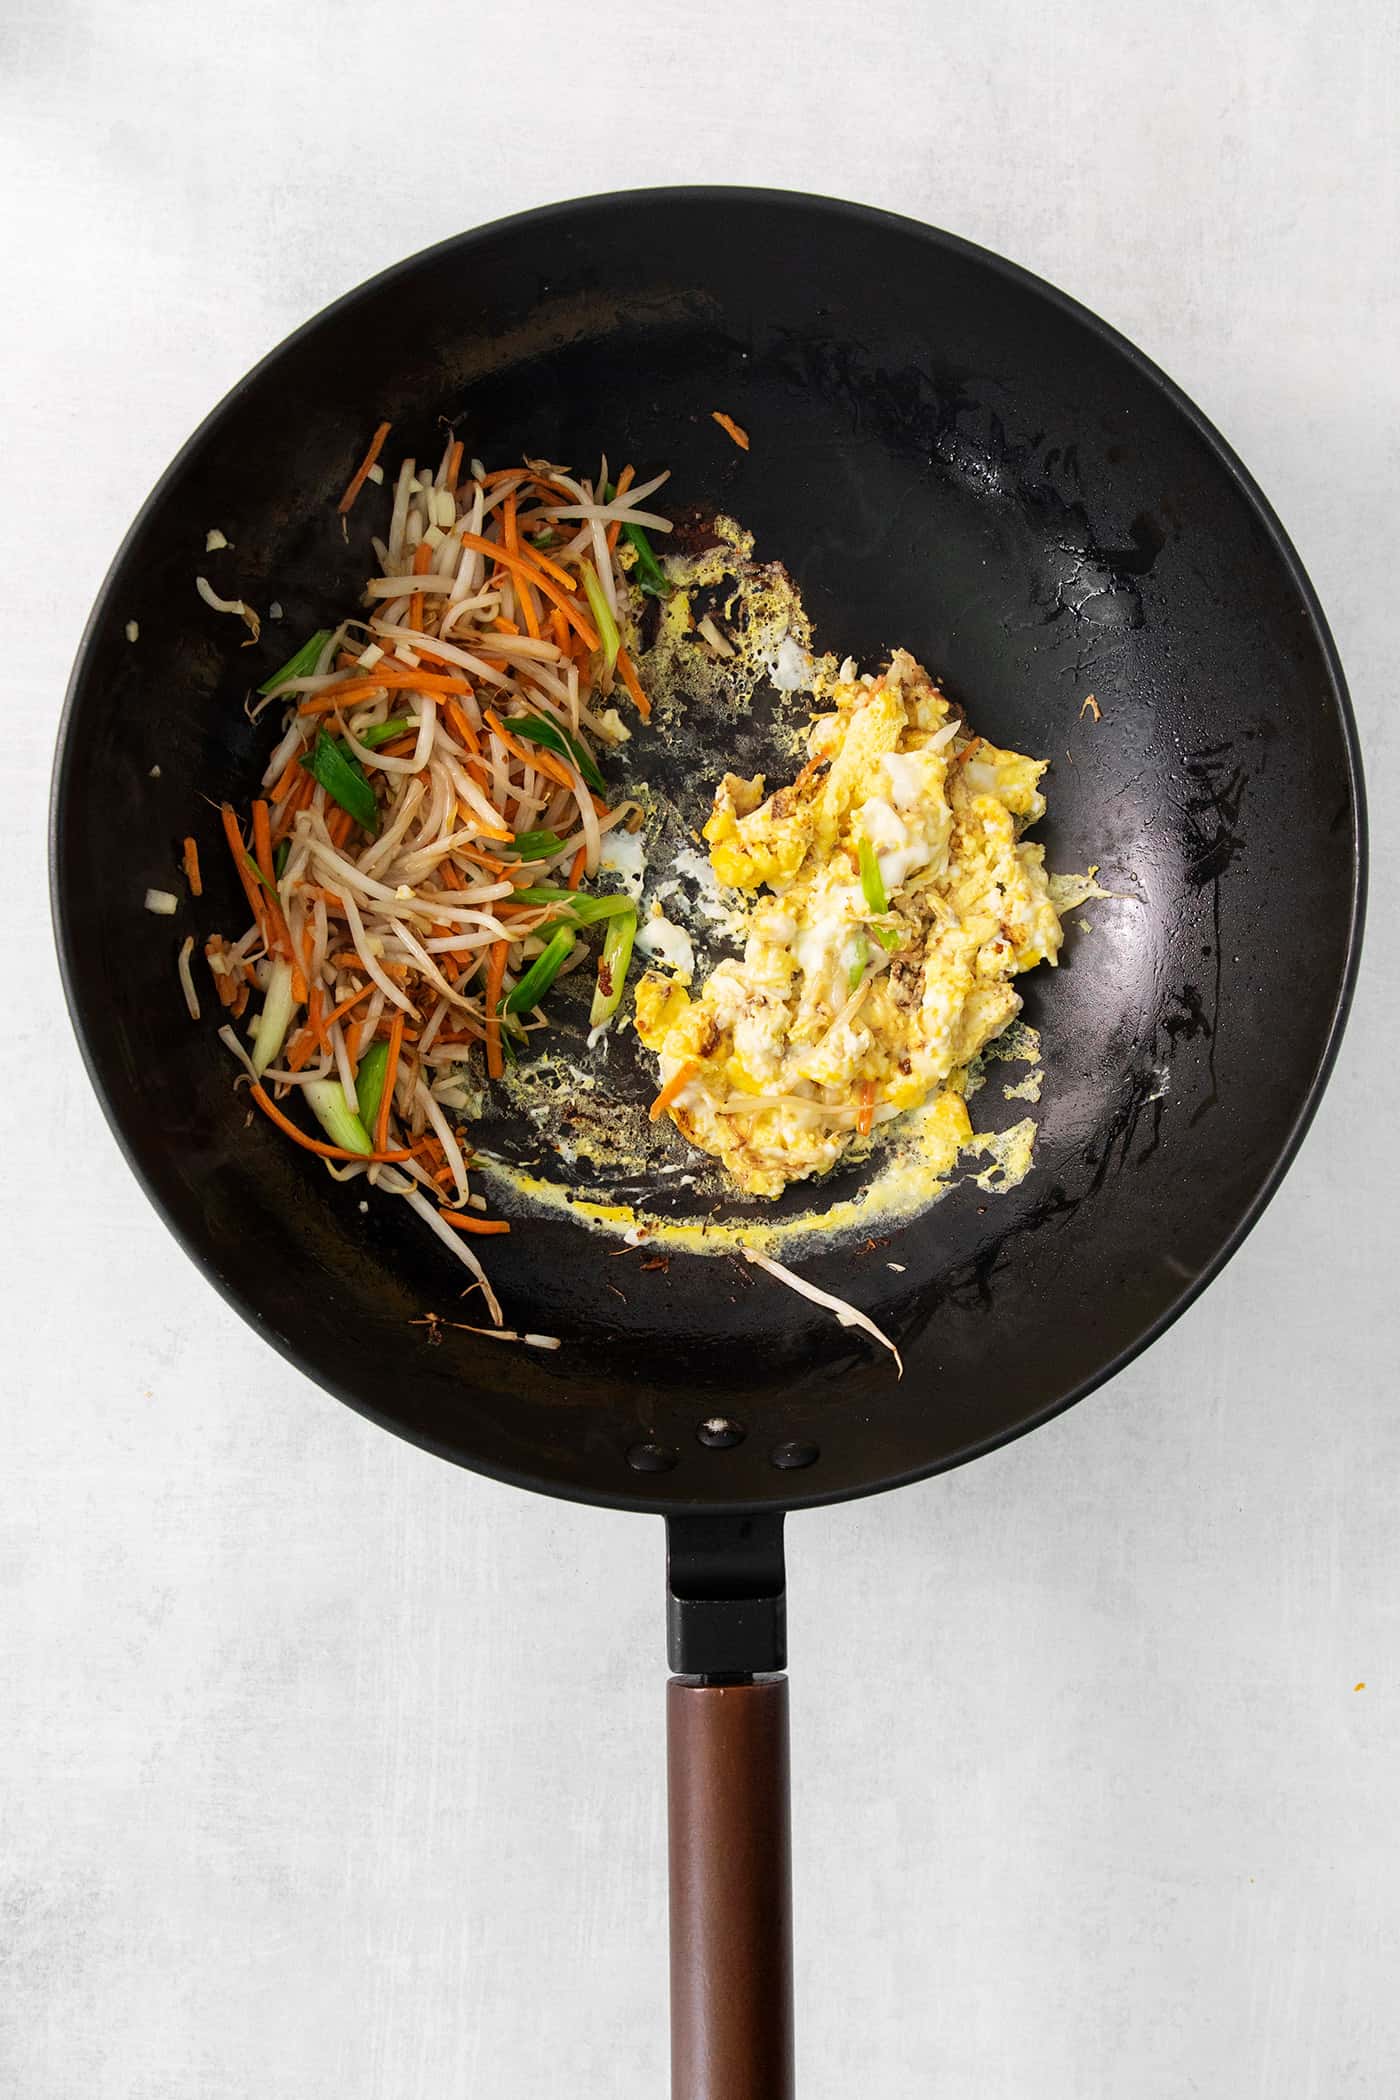 Scrambled eggs and vegetables cook in a black skillet for shrimp pad Thai.